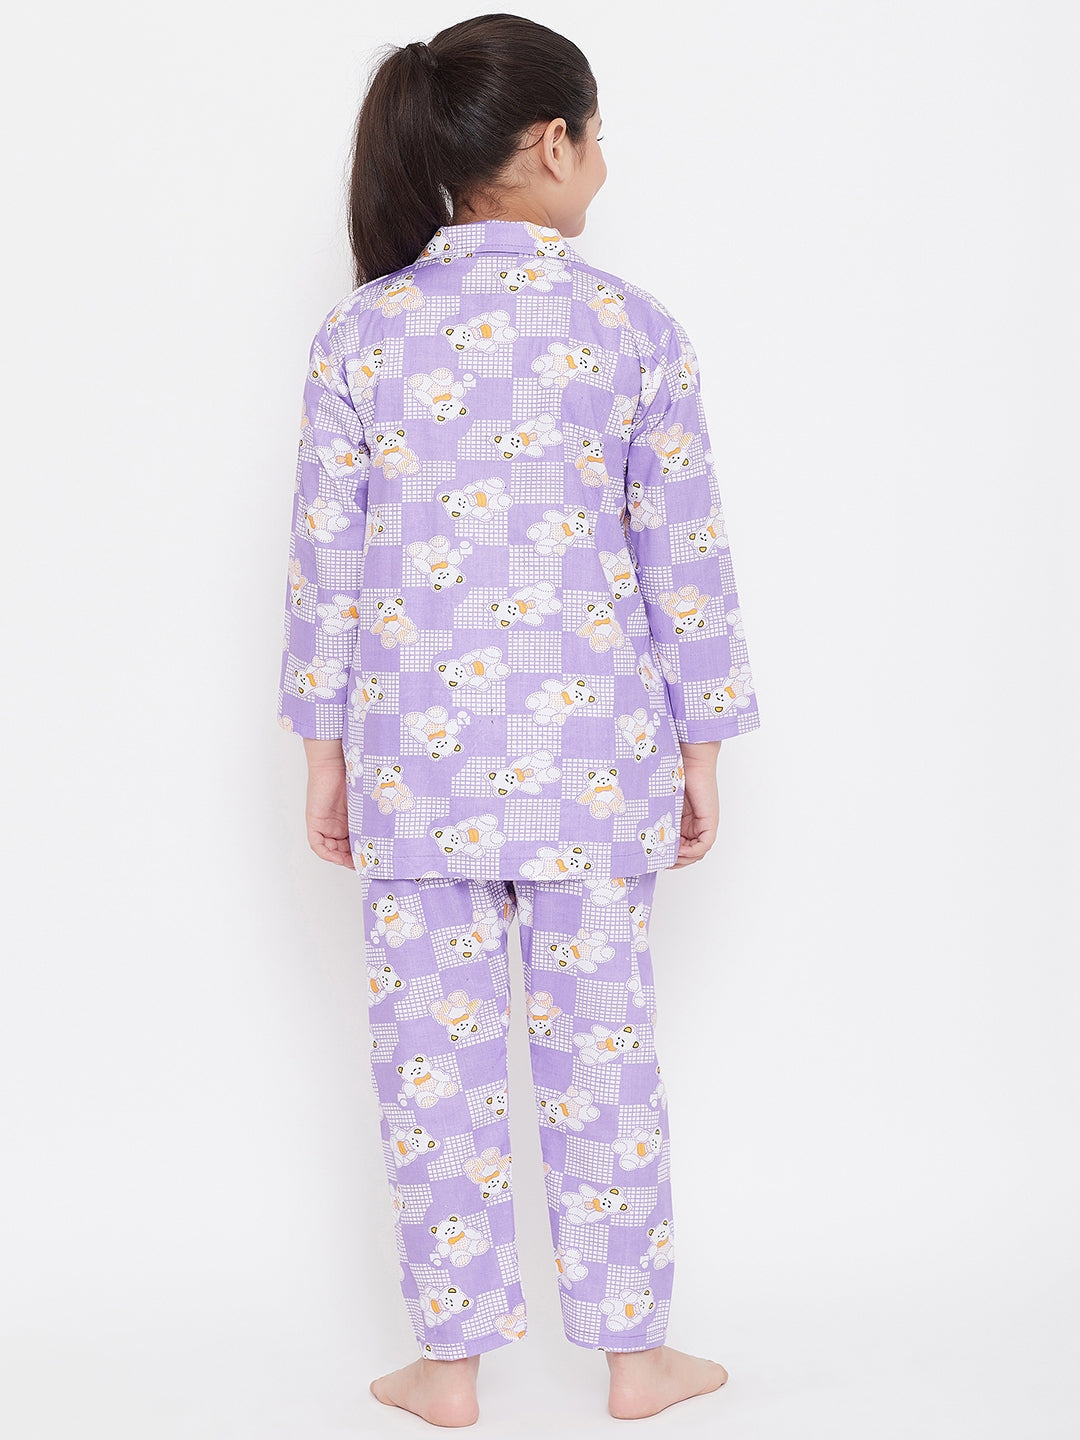 Kydzi Peach & Purple Printed Rayon Nightsuit (Pack of 2)